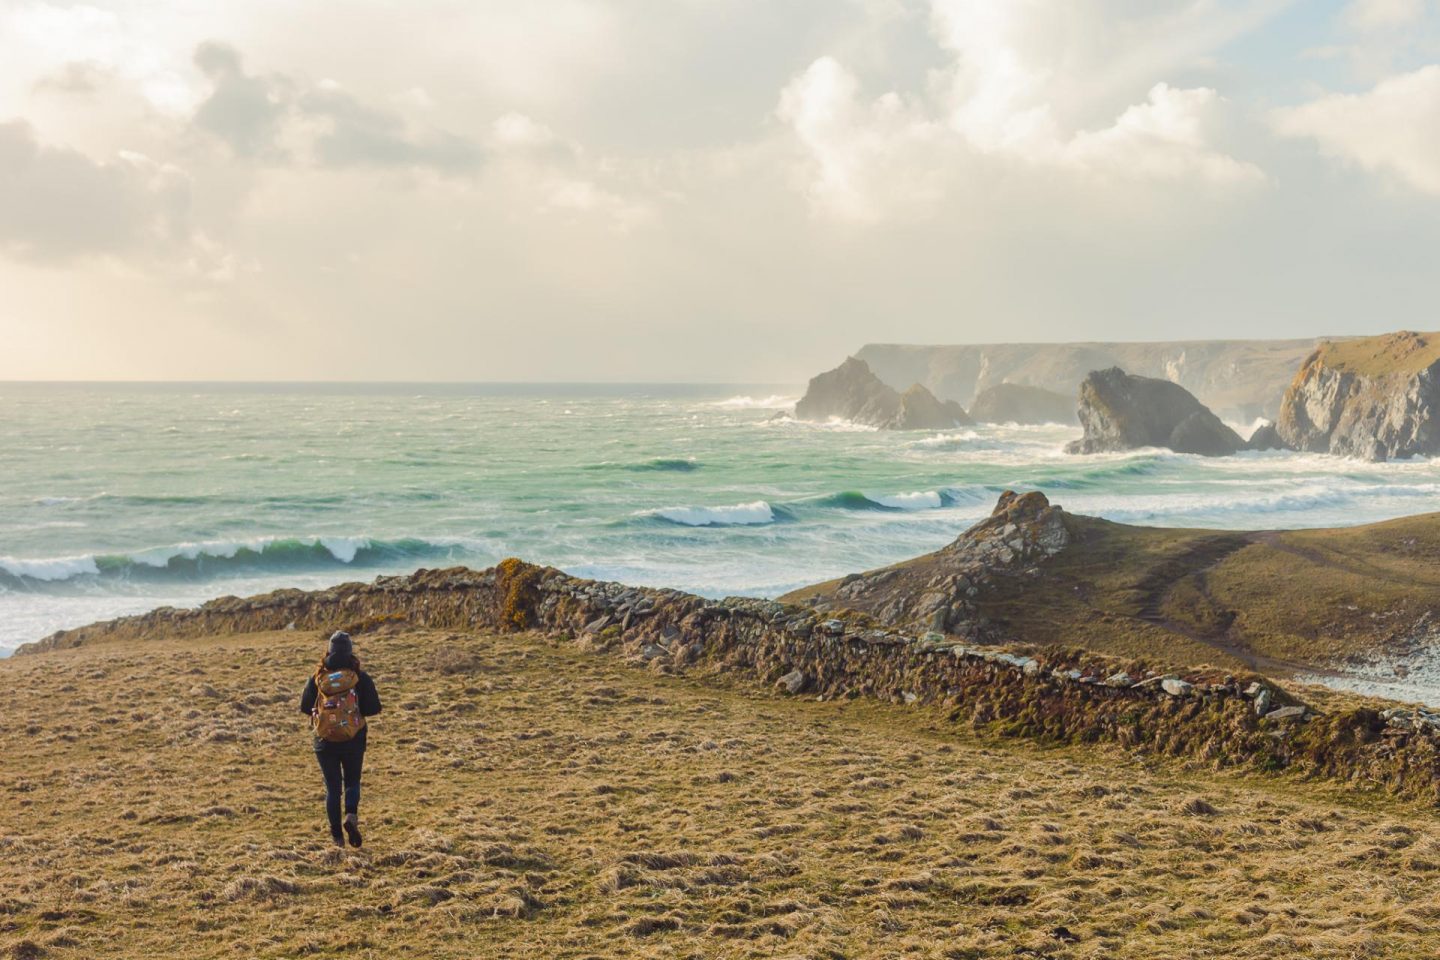 The Serpentine Coast Cornwall | South West Coast Path Walks where to stay and walk on the Lizard Peninsula